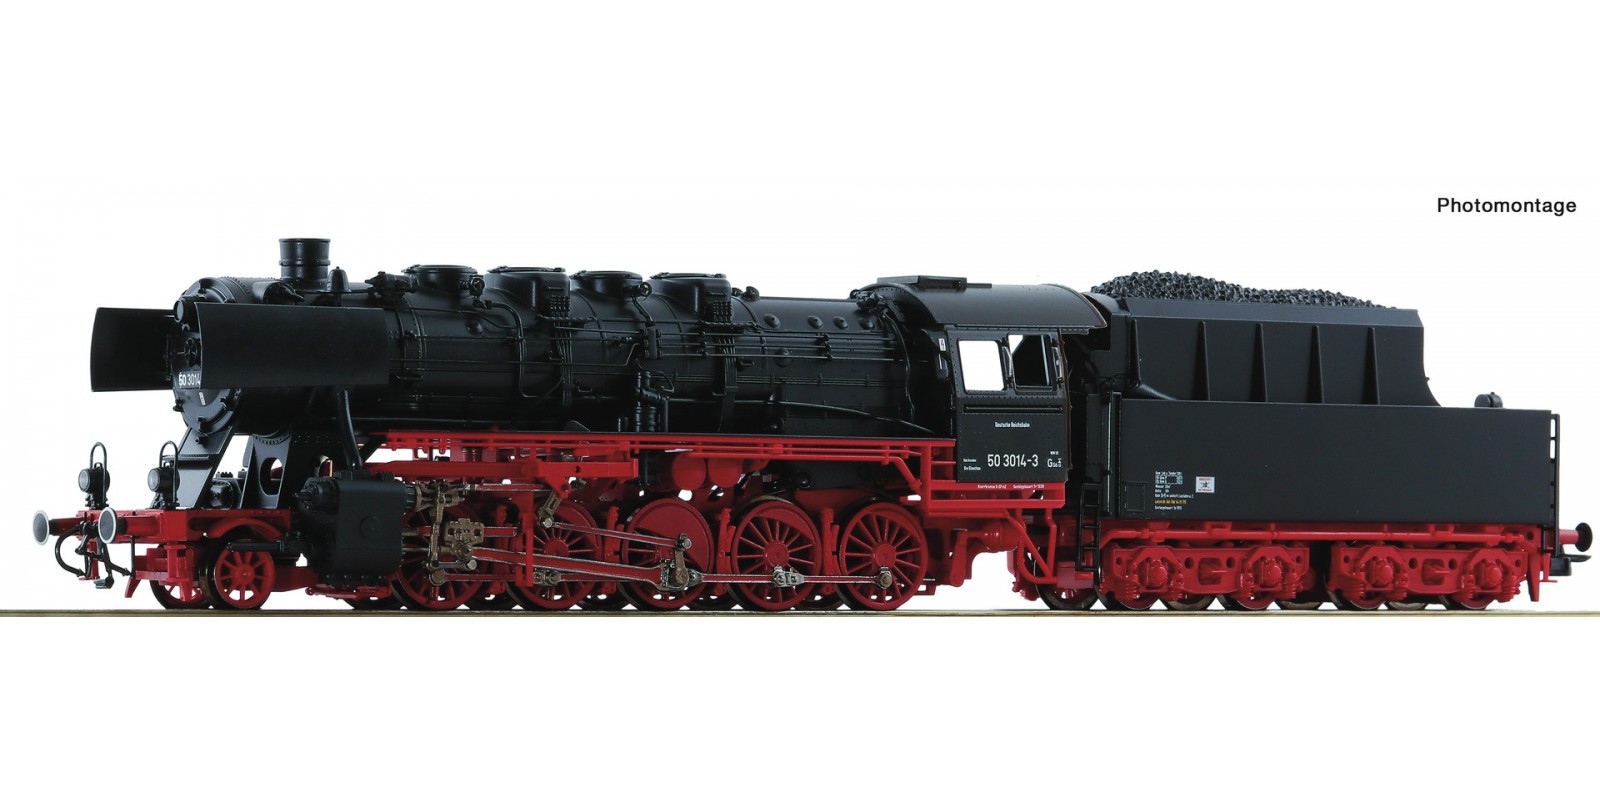 RO70042 Steam locomotive class 50, DR